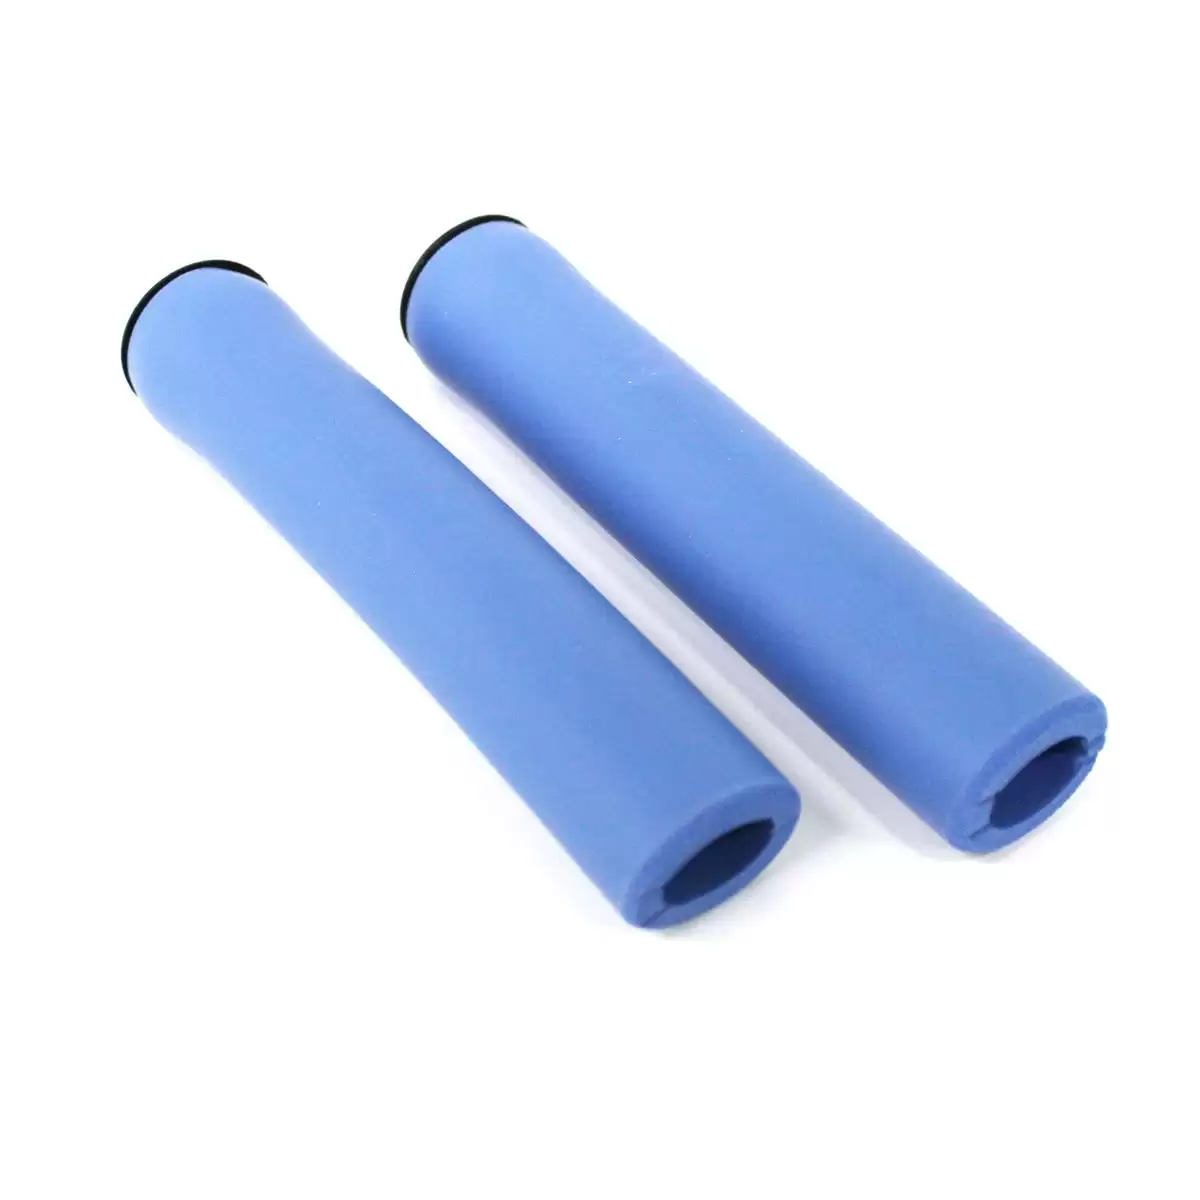 Pareja puños Super Grip HL-001 silicona azul 130mm - image